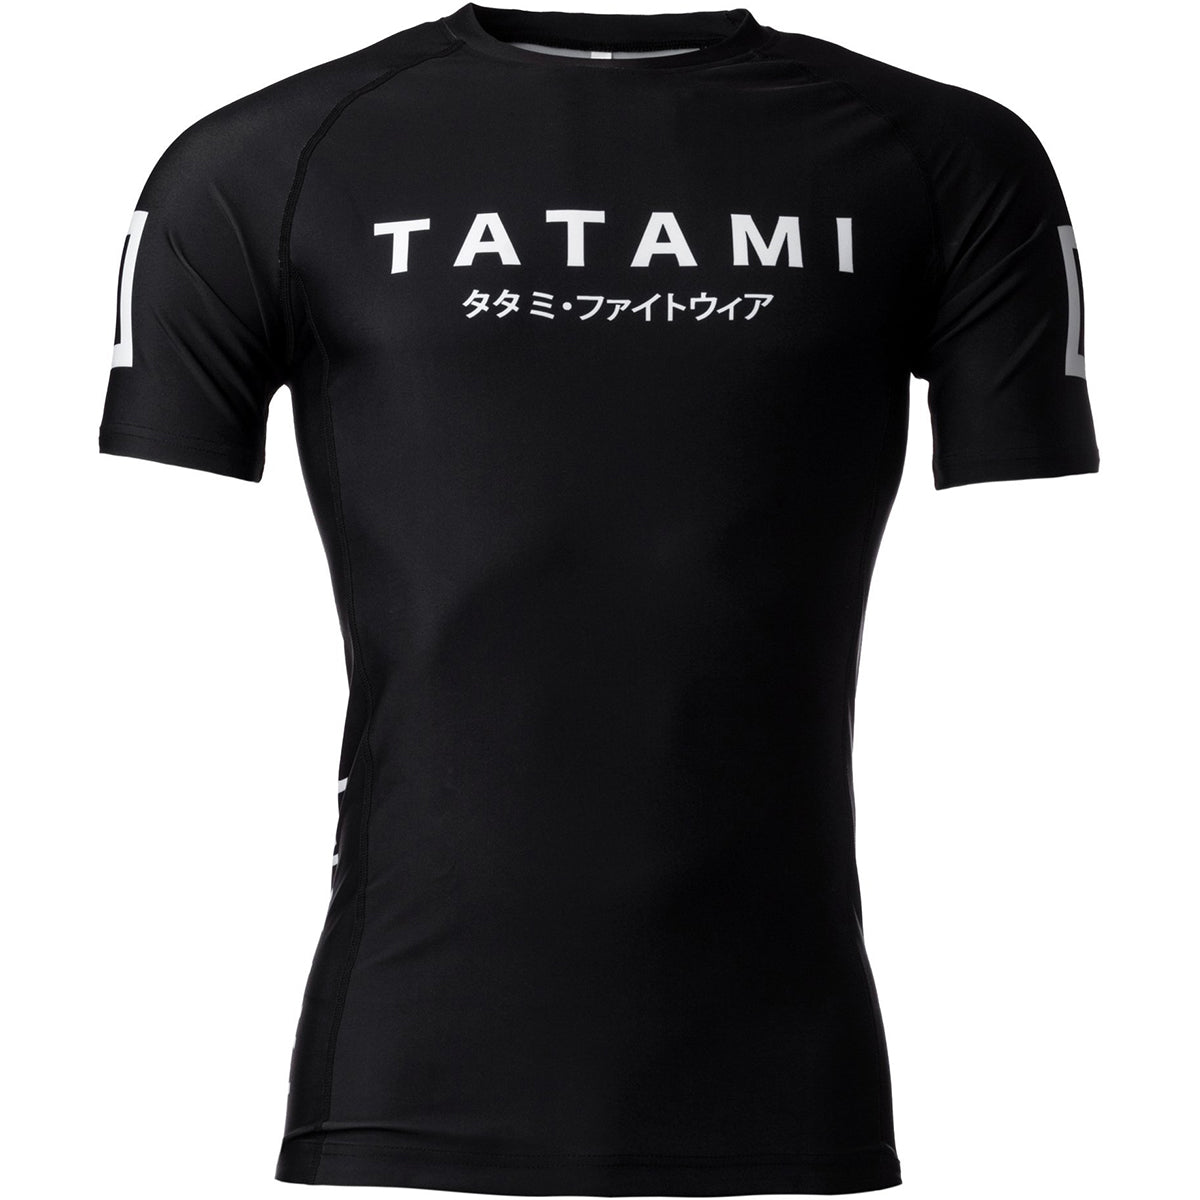 Tatami Fightwear Katakana Short Sleeve Rashguard - Black Tatami Fightwear